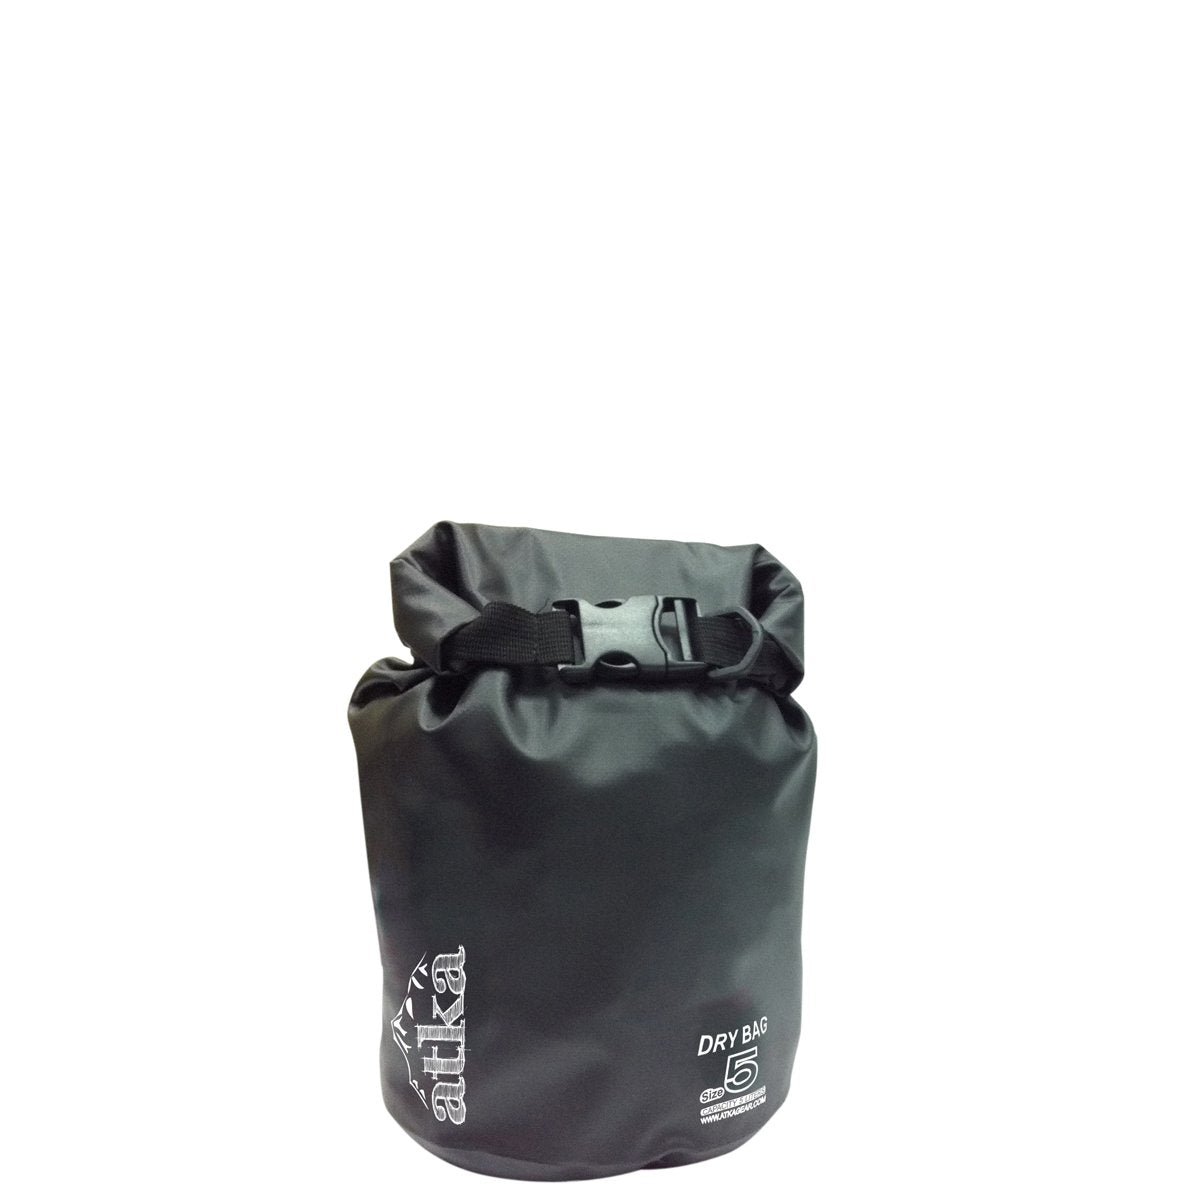 Drybag 10L - Black